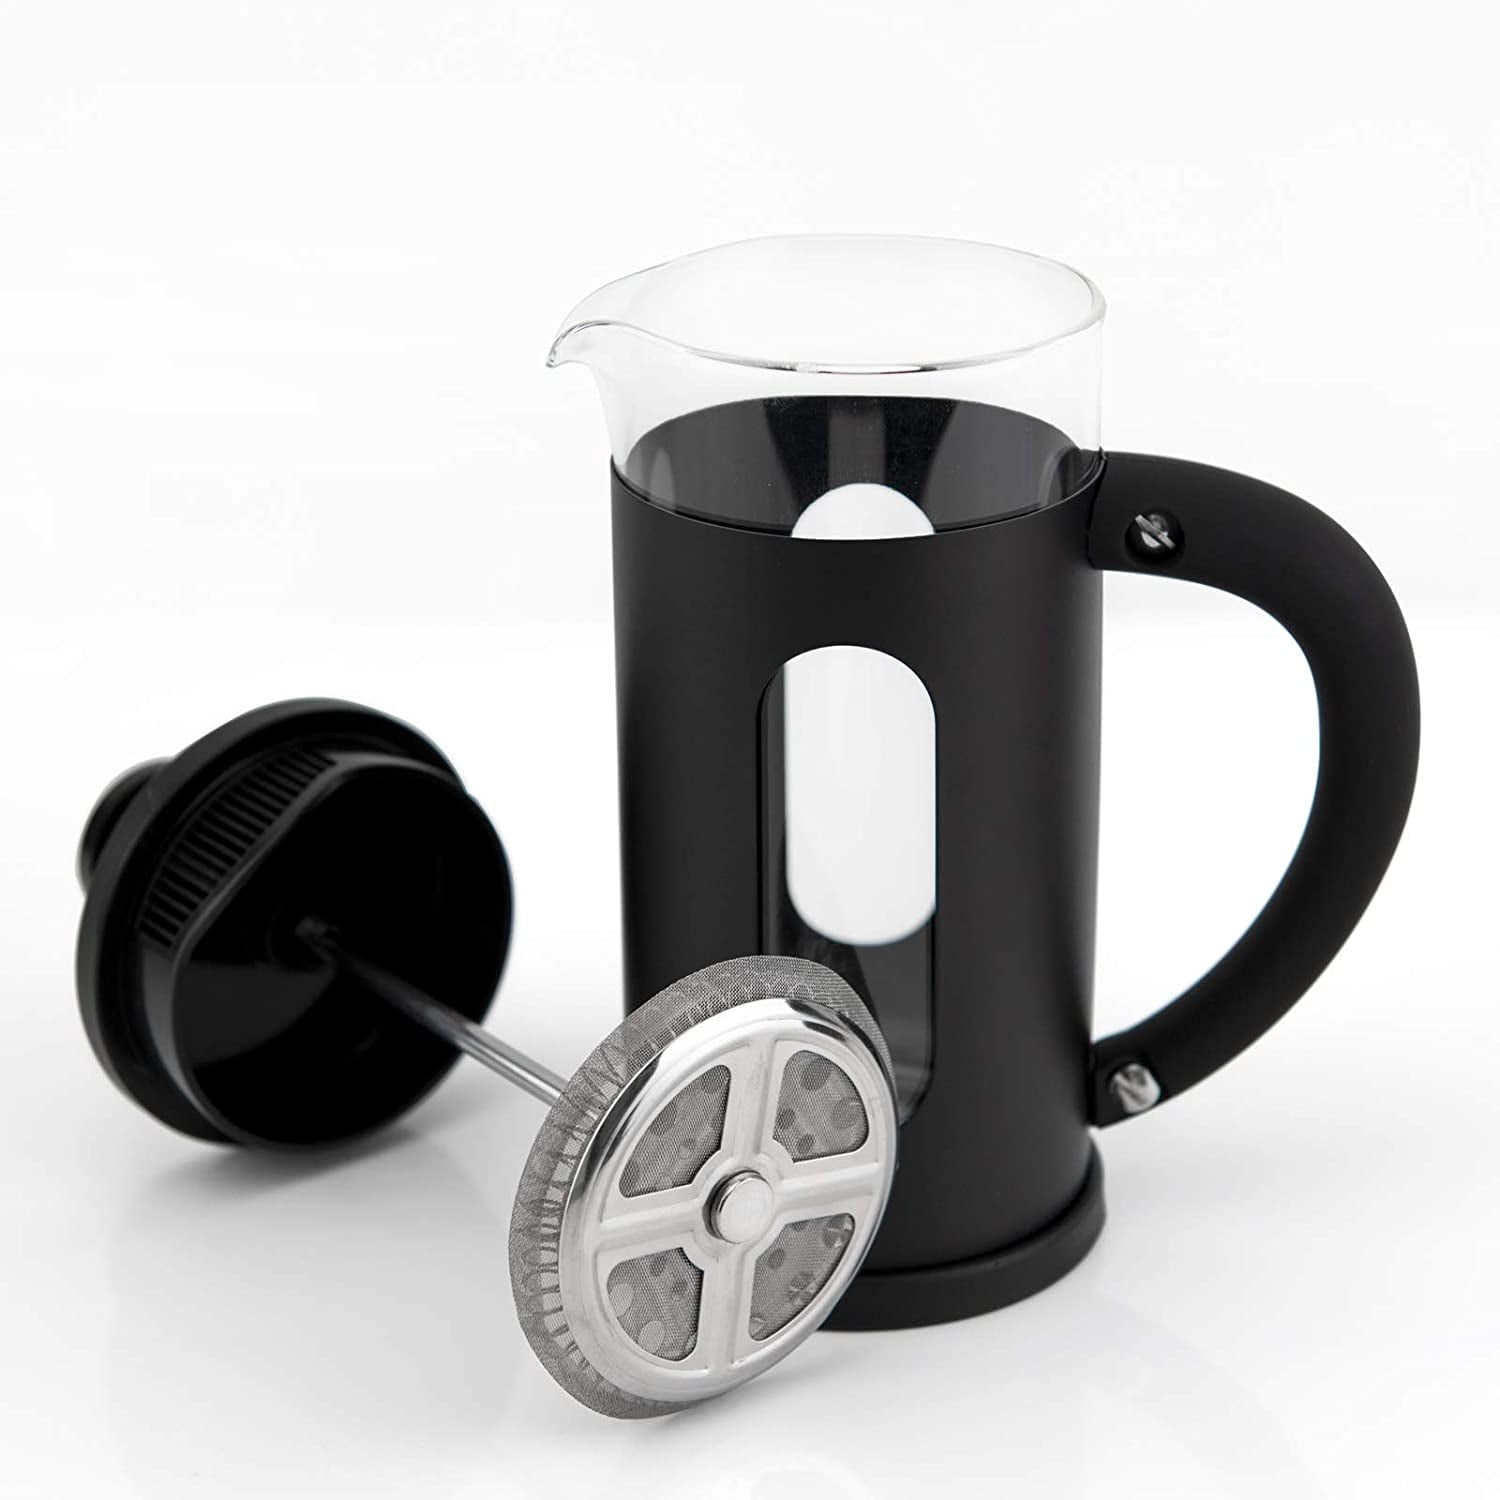 KONA French Press Small Single Serve Coffee and Tea Maker, Black 12 oz